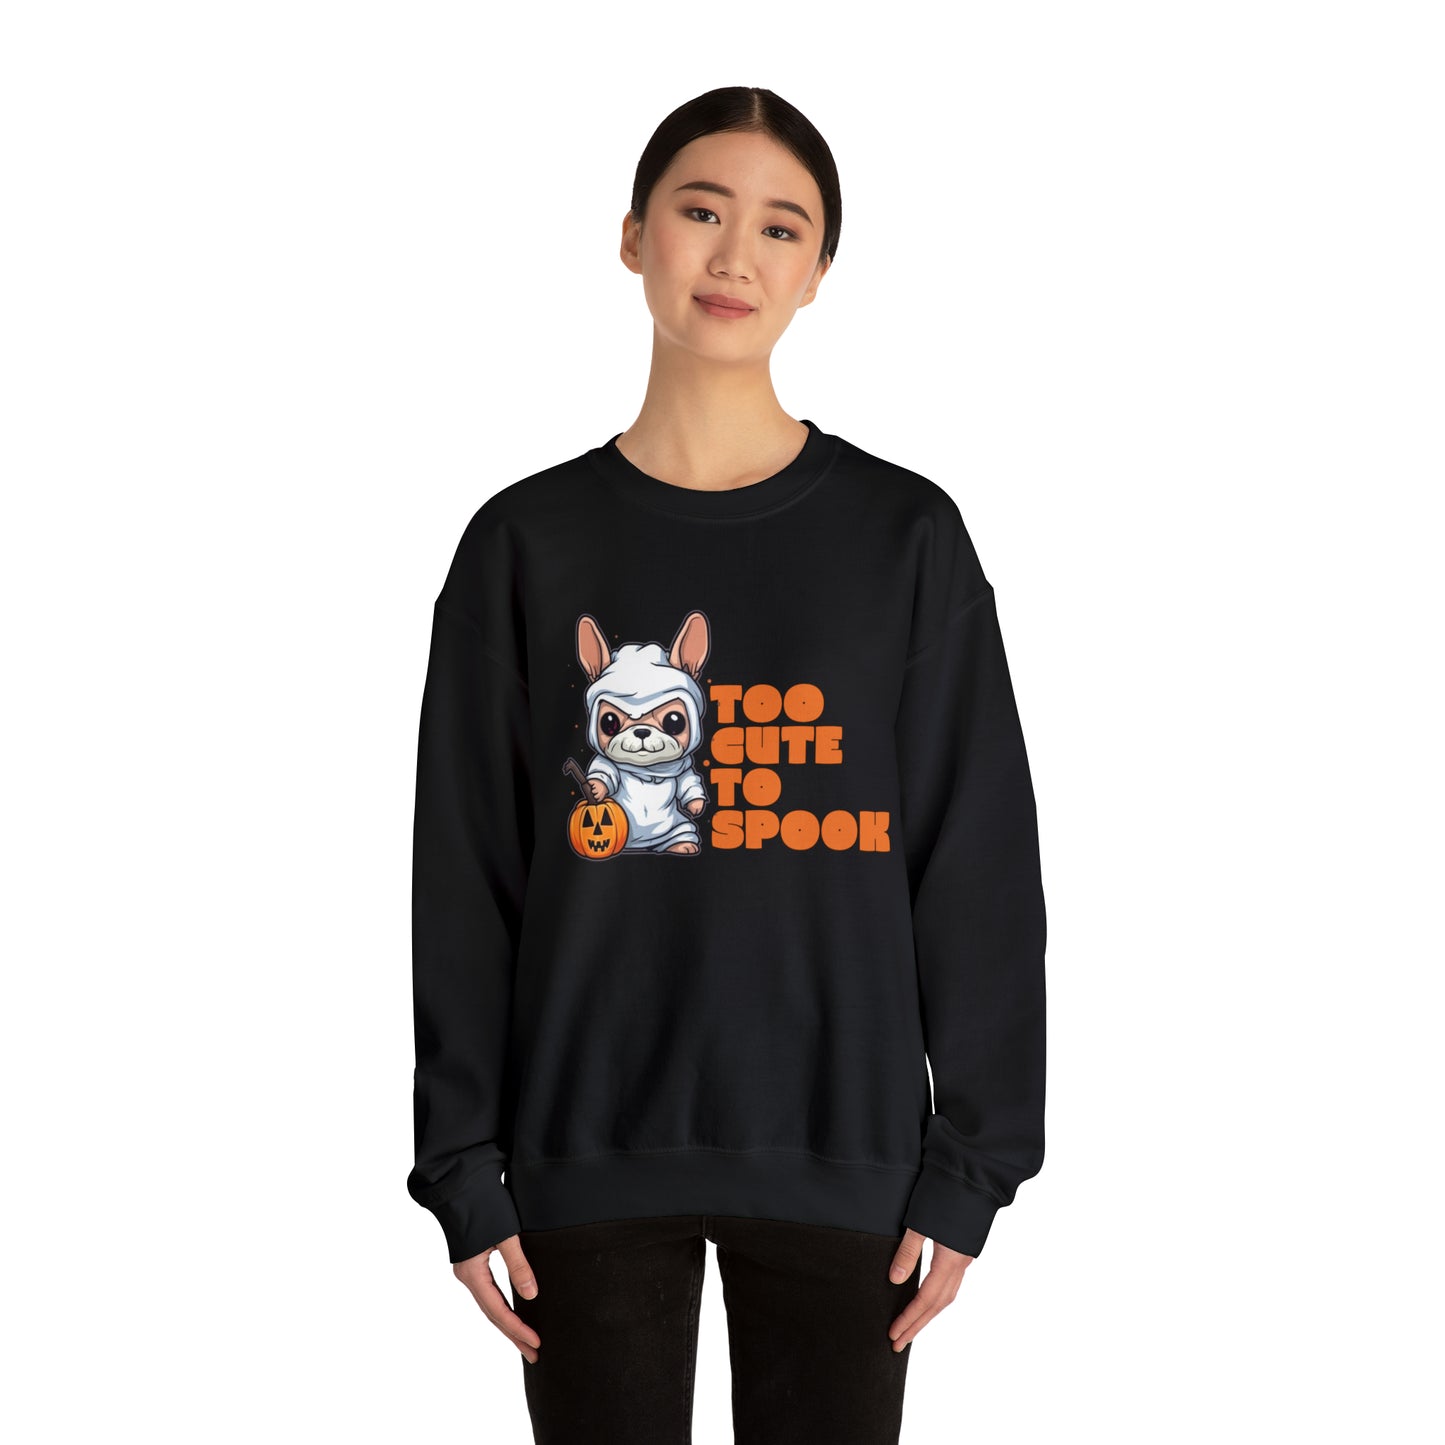 Too Cute to Spook Halloween Unisex Sweatshirt